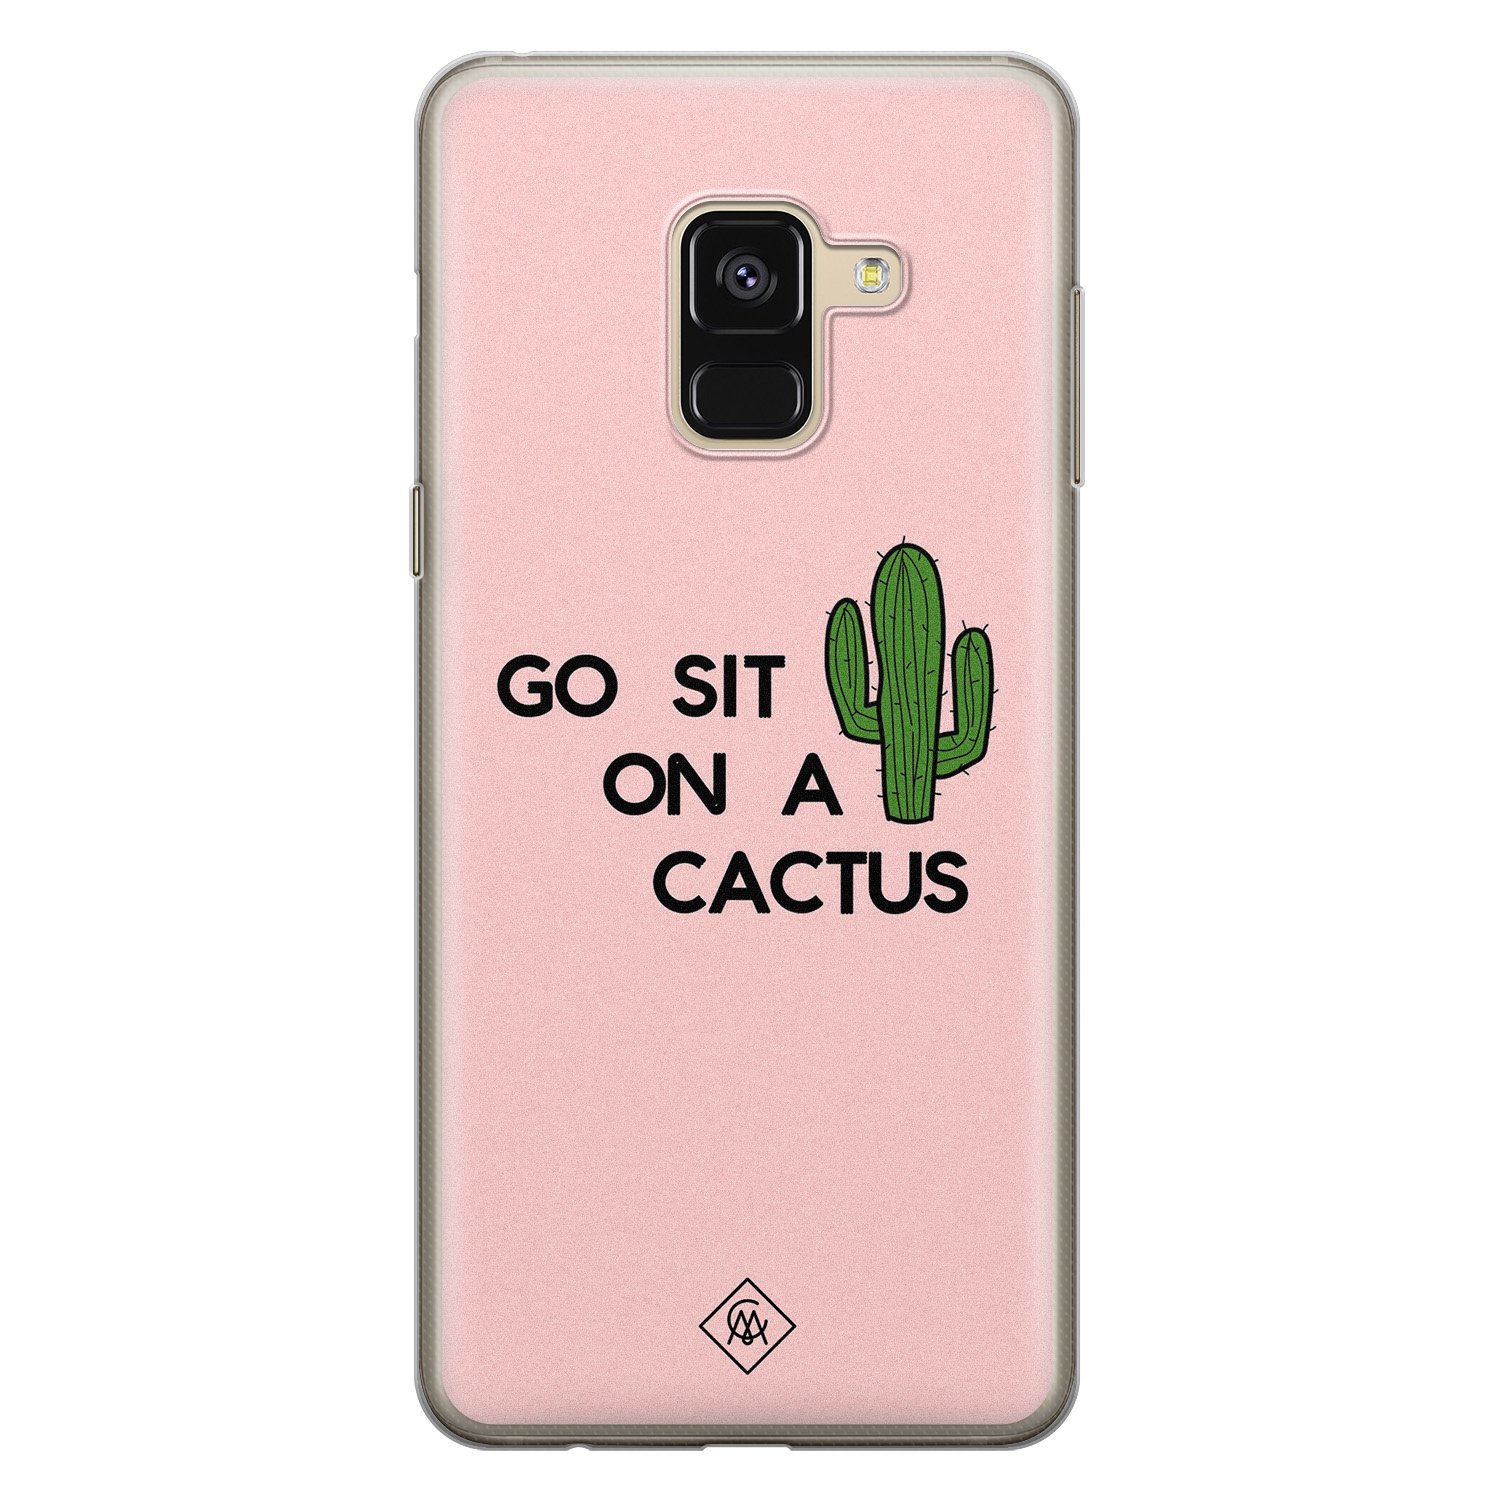 Samsung Galaxy A8 (2018) siliconen hoesje - Go sit on a cactus